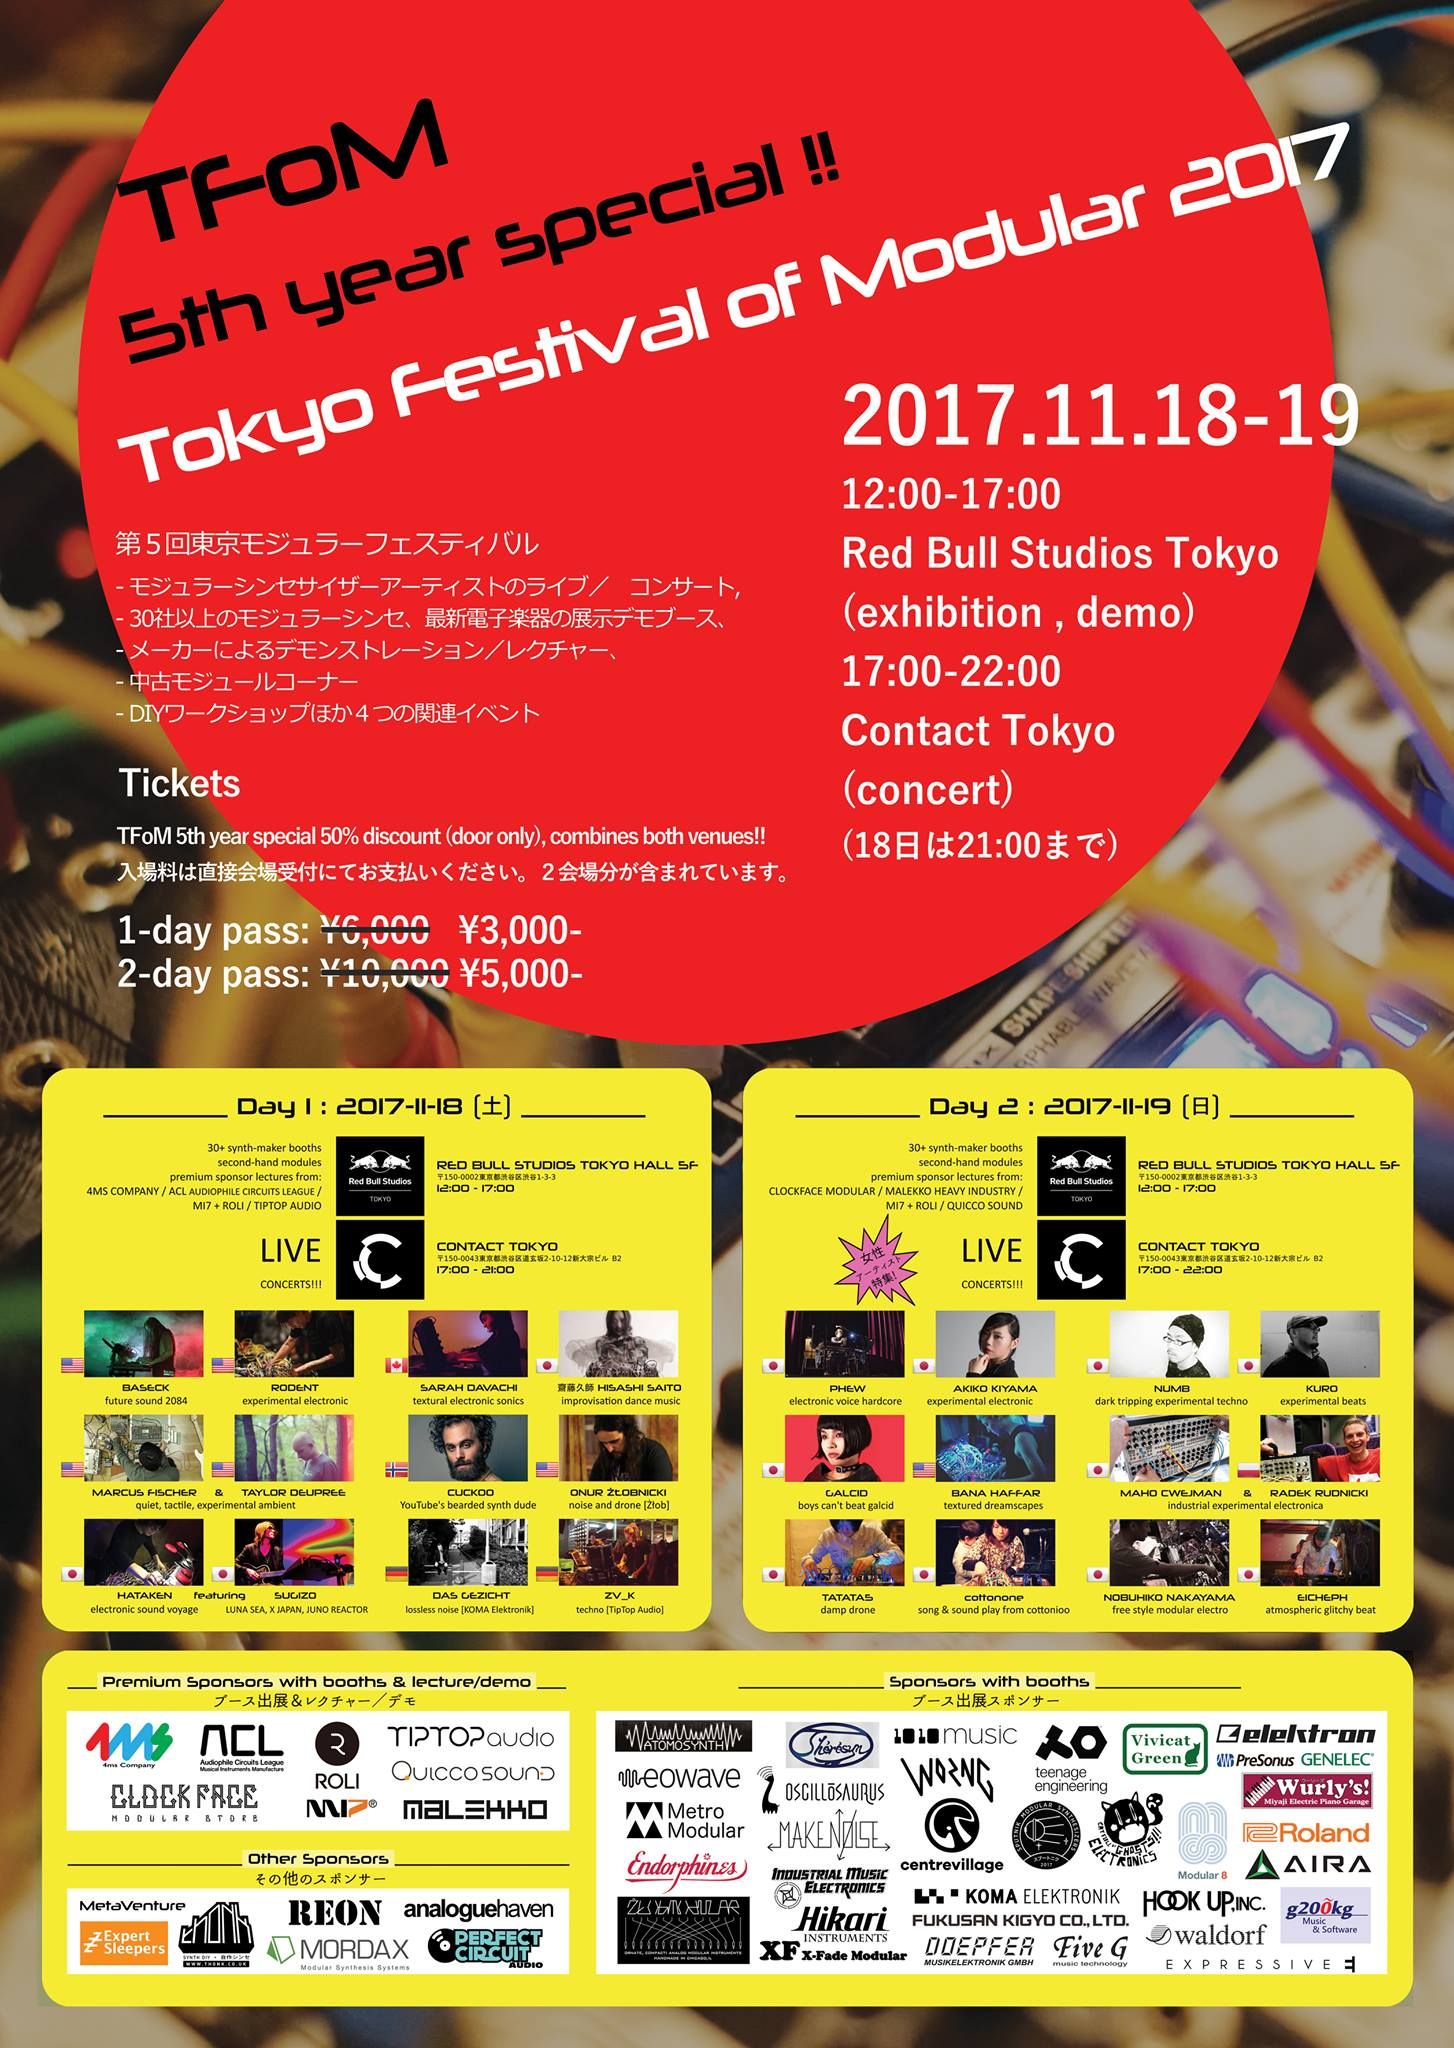 Tokyo Festival of Modular 2017 Concert